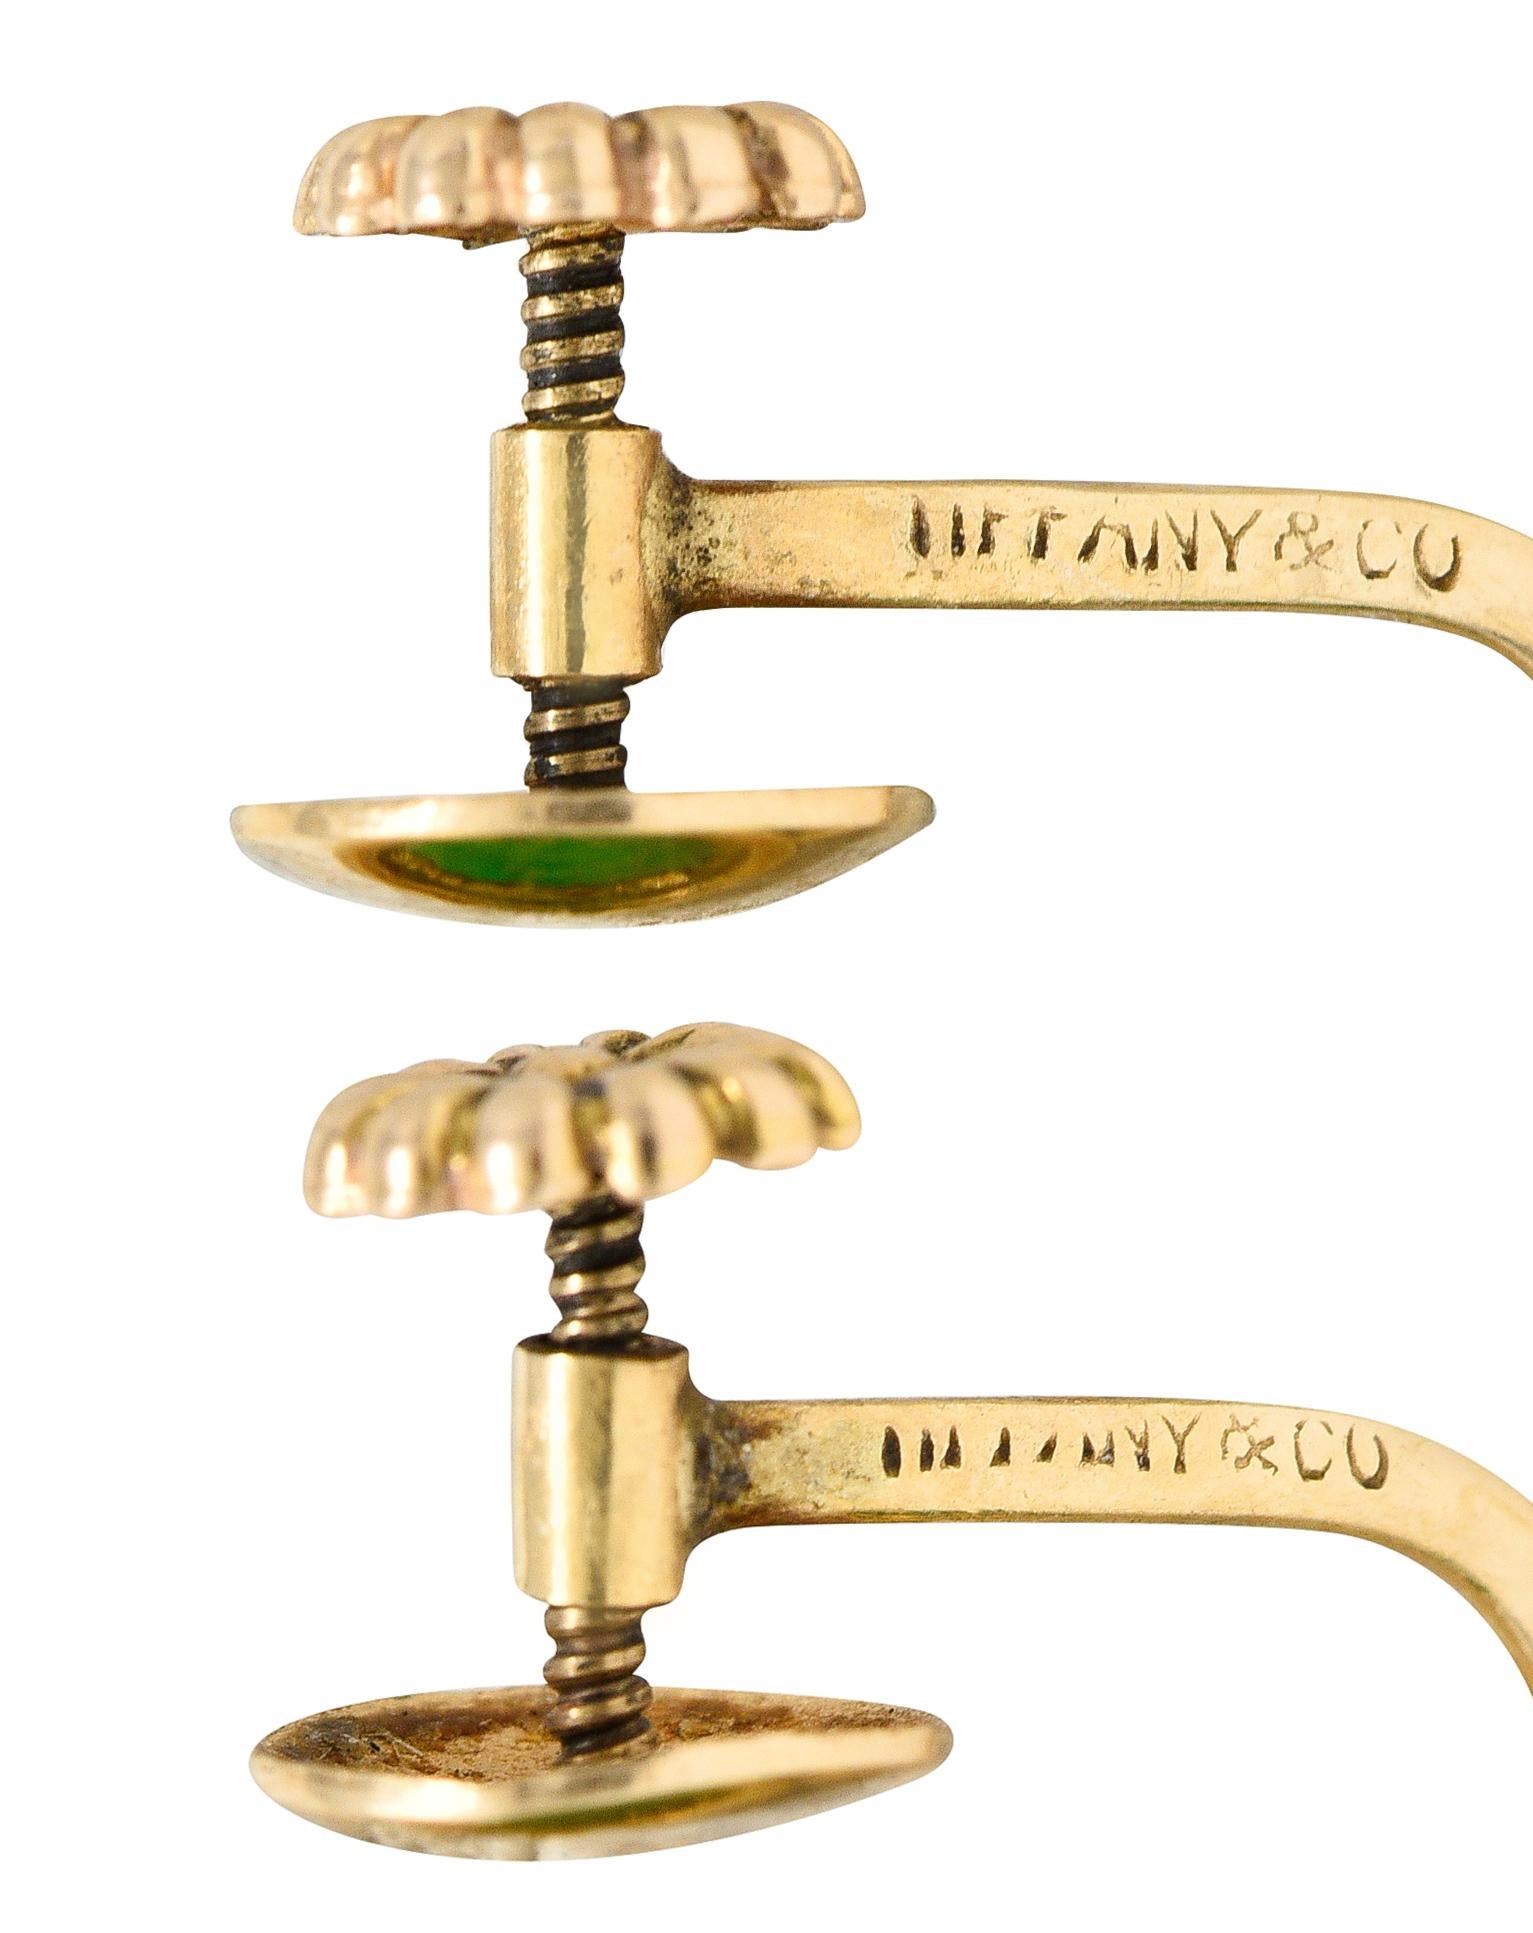 tiffany jade earrings